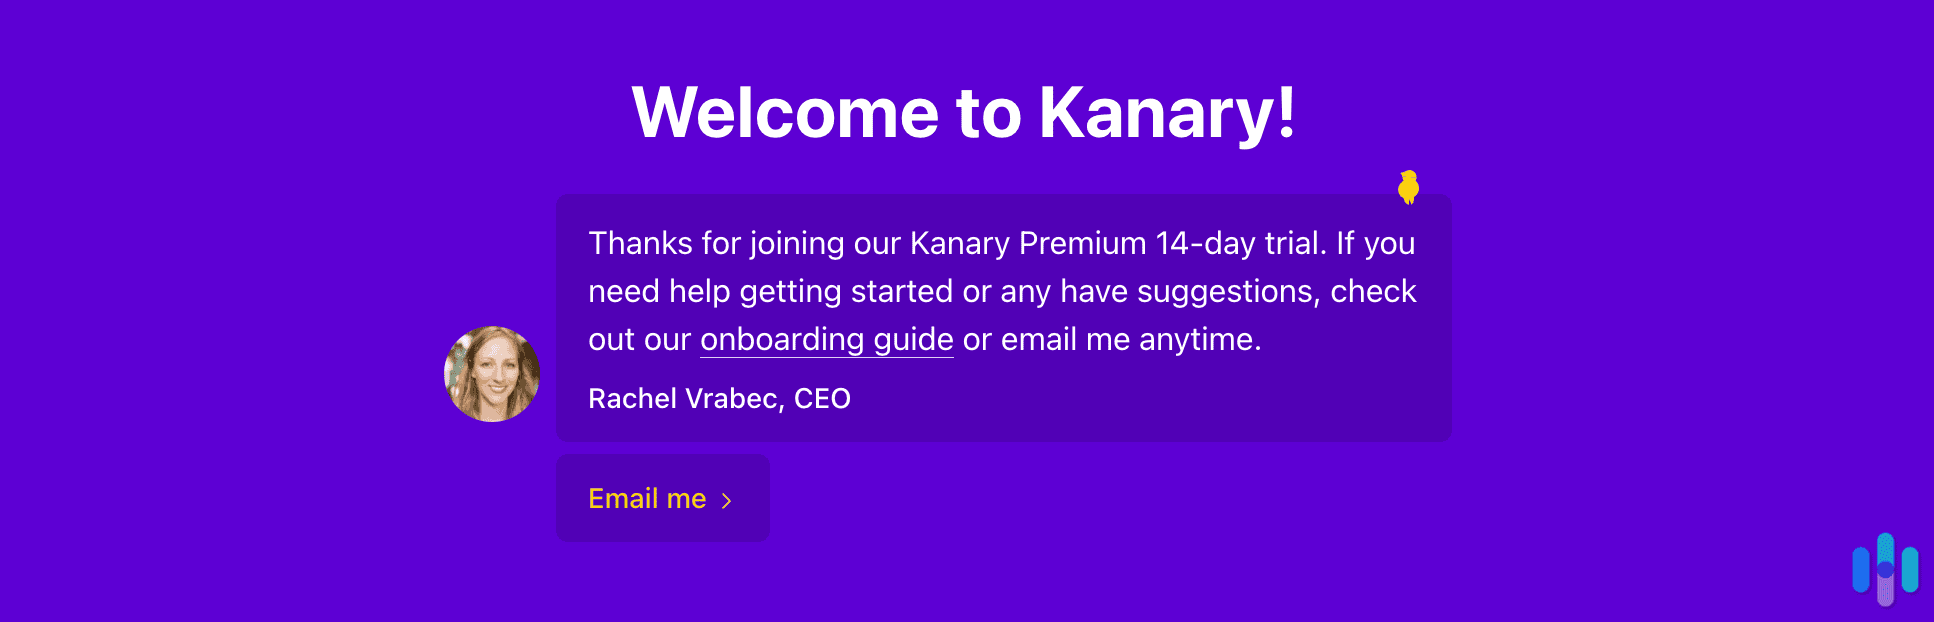 Kanary CEO message